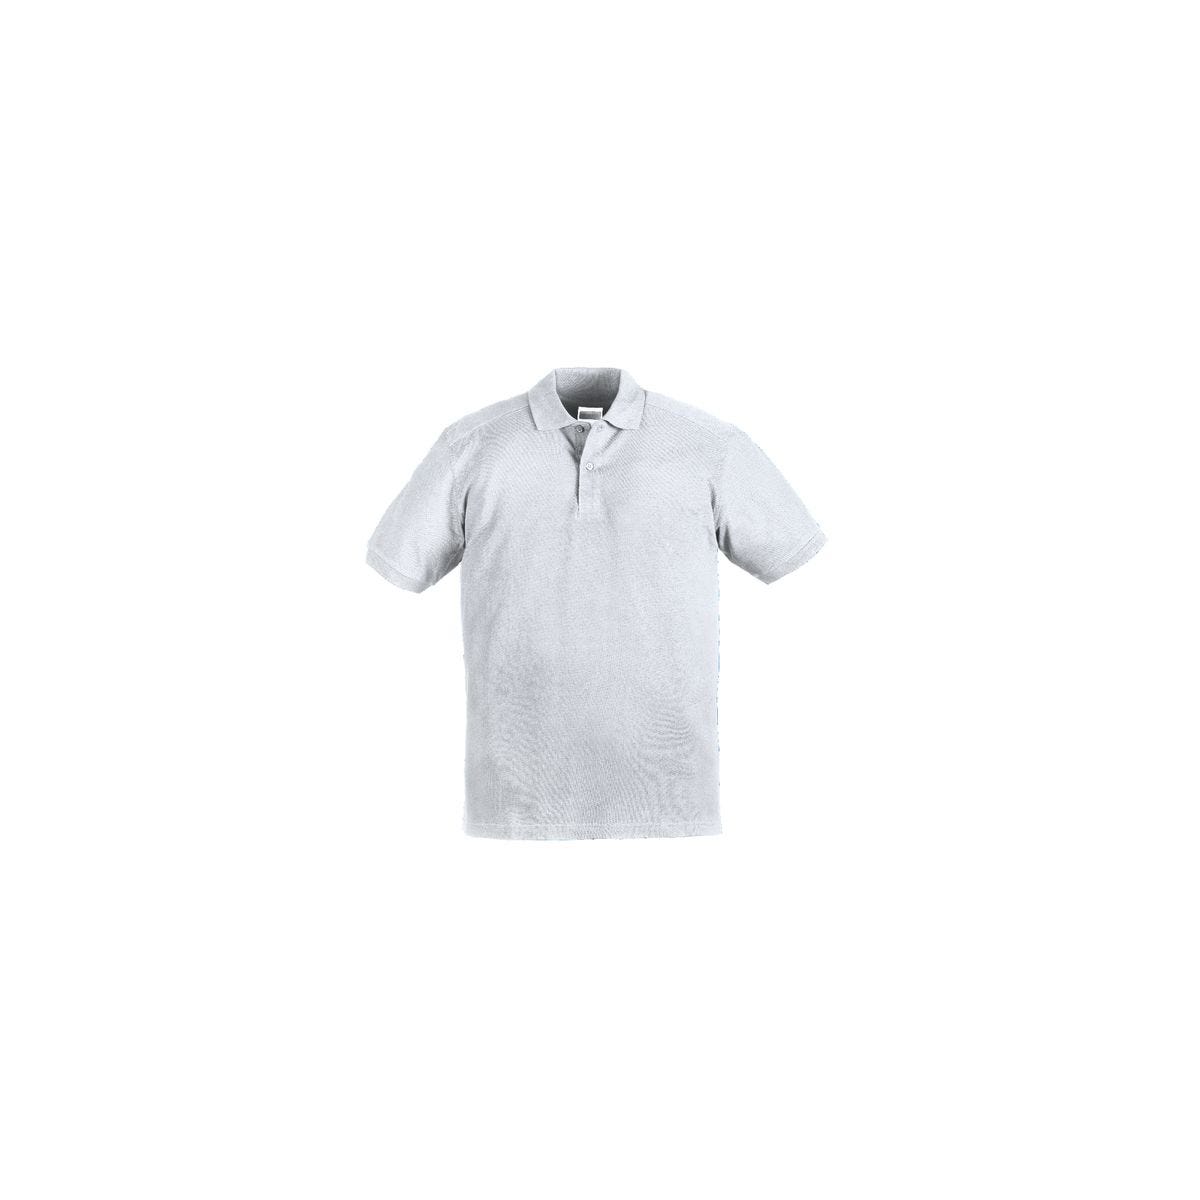 SAFARI Polo MC blanc, 100% coton, 220g/m² - COVERGUARD - Taille XL 0